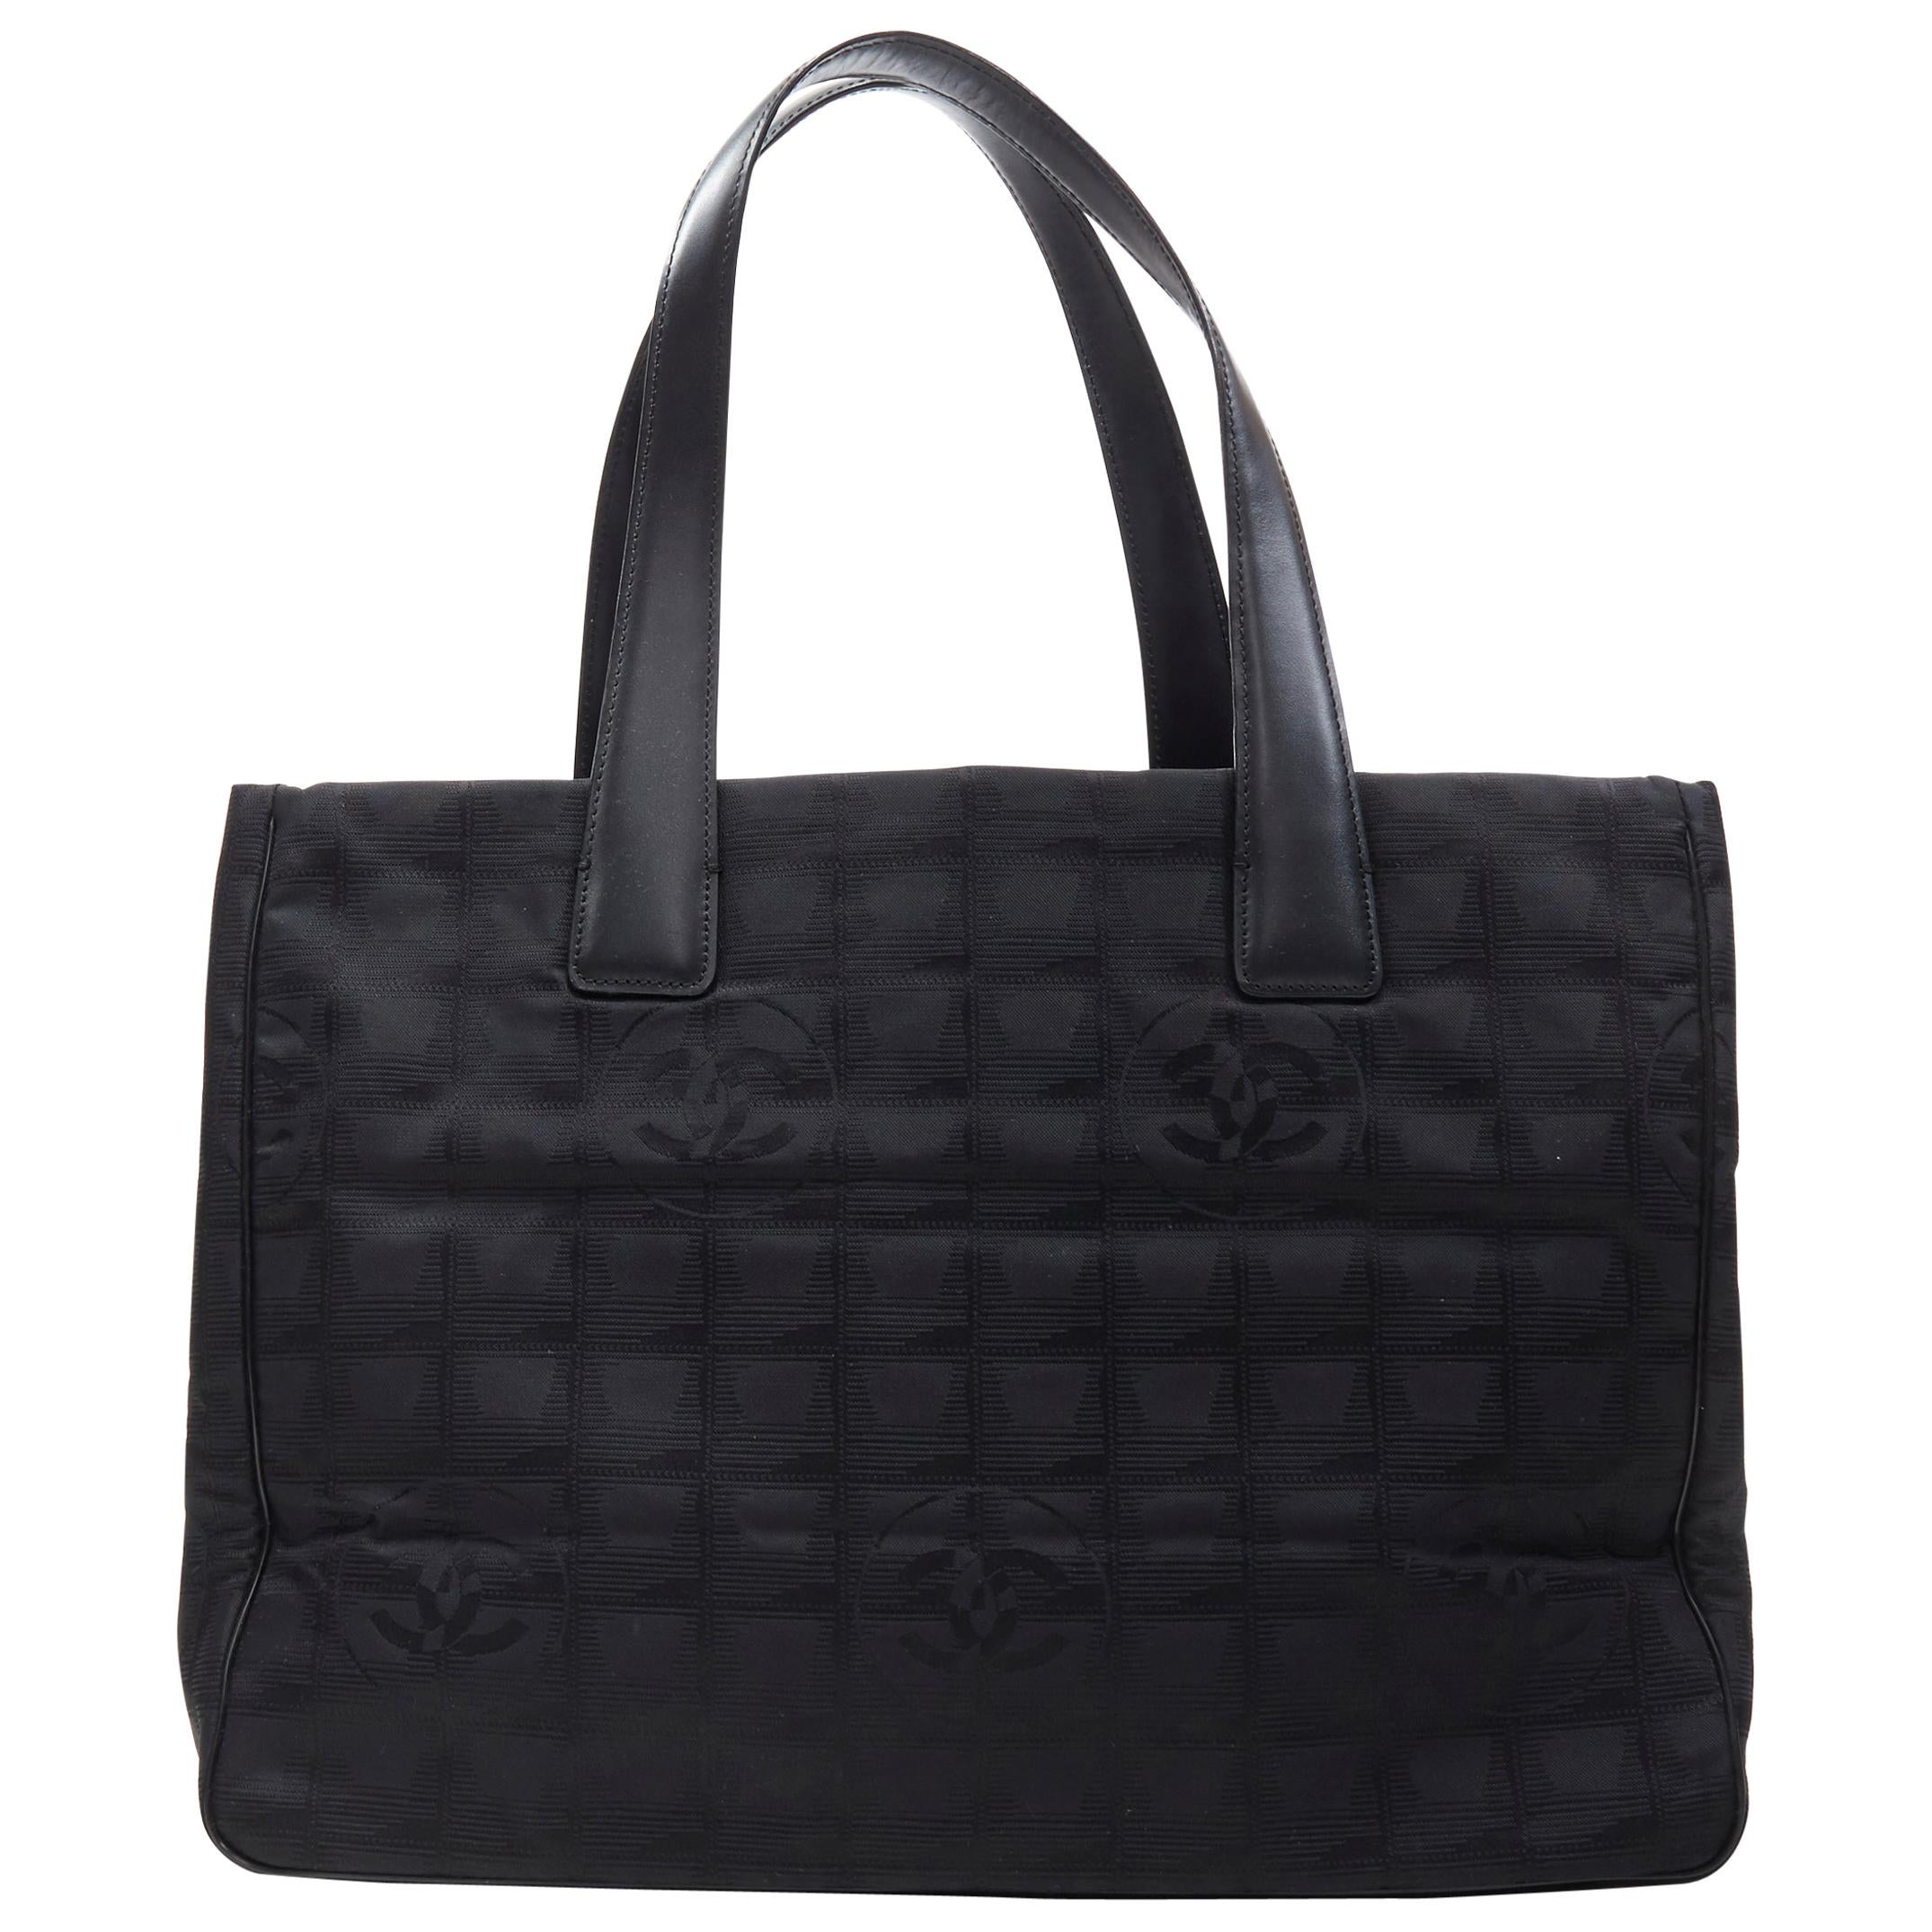 Authentic Chanel Travel Line MM Shoulder Tote Bag Handbag Nylon Leather  Black